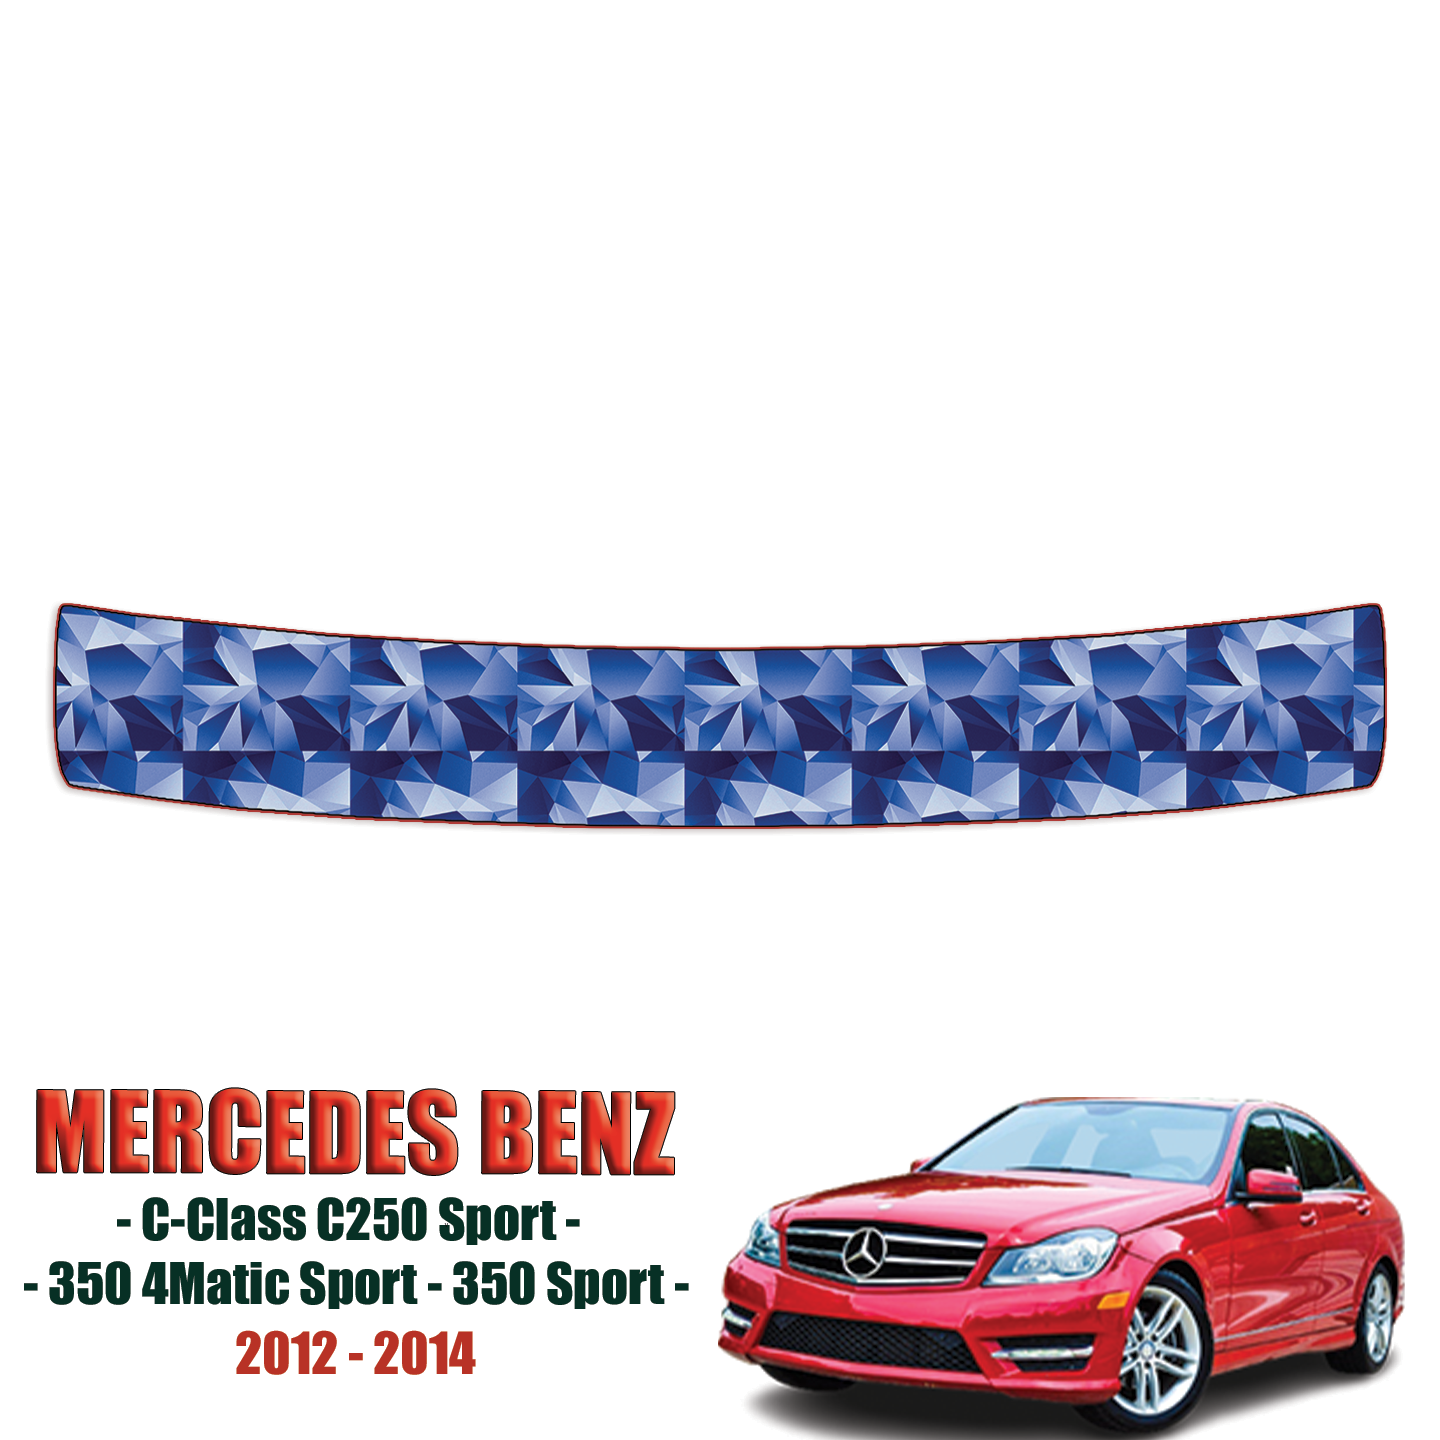 2012-2014 Mercedes Benz C-Class, C250 Sport, 300 4matic Sport, 350 Sport Precut Paint Protection Kit – Bumper Step